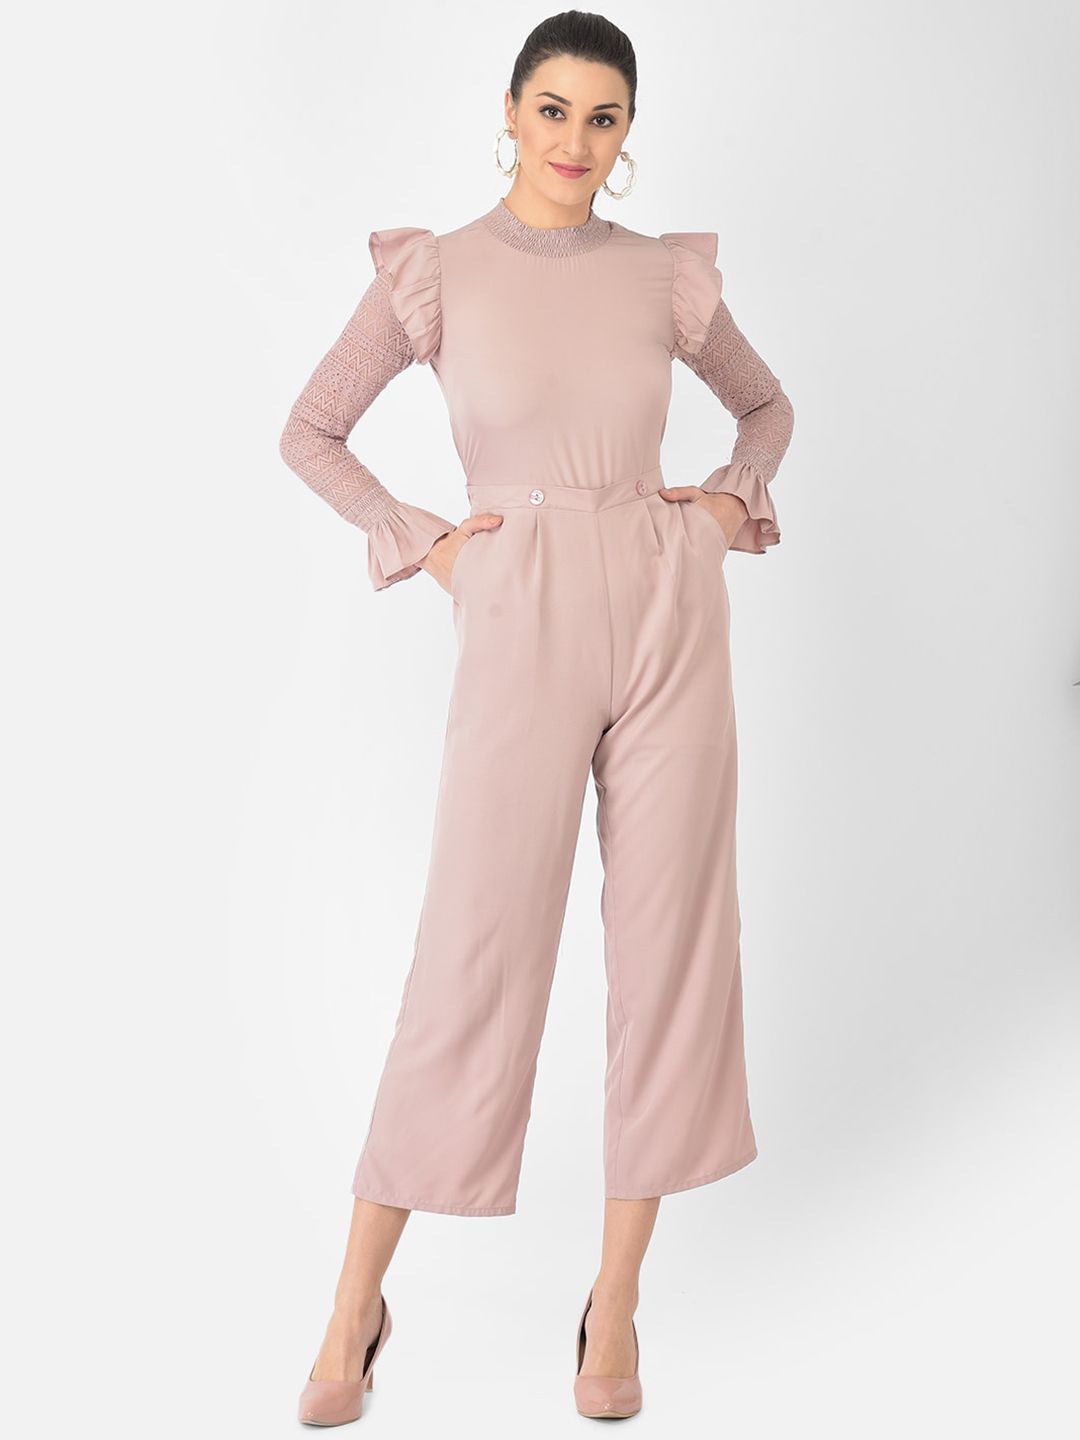 Eavan Women Pink Self Design Basic Jumpsuit Price in India